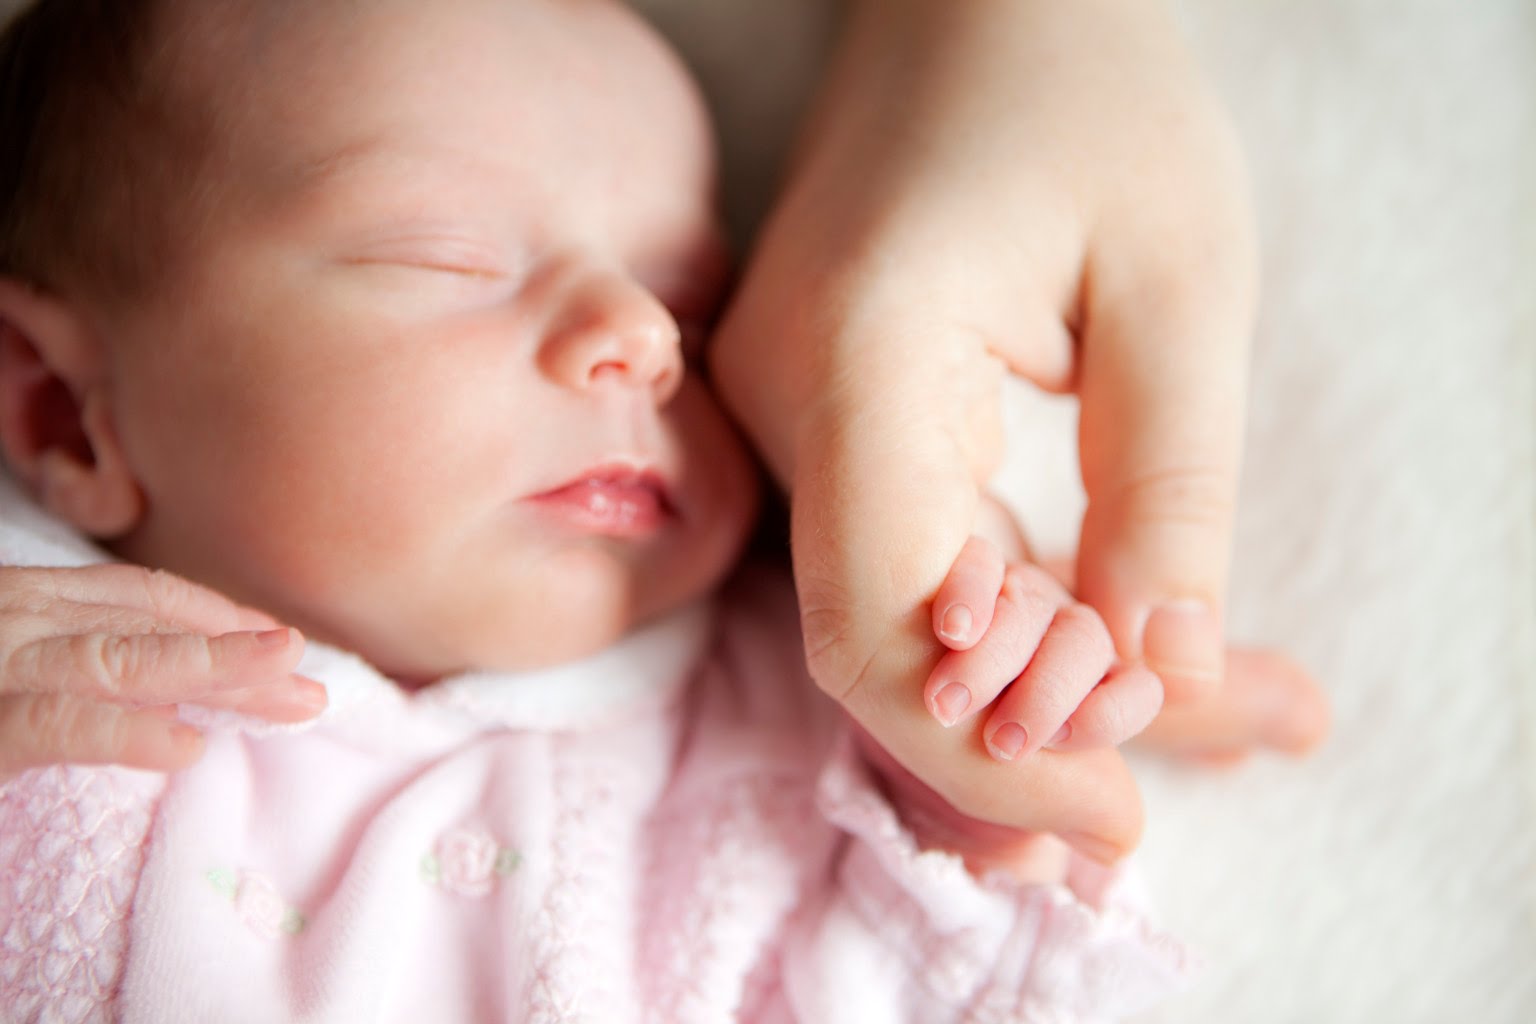 Infant colic in newborns